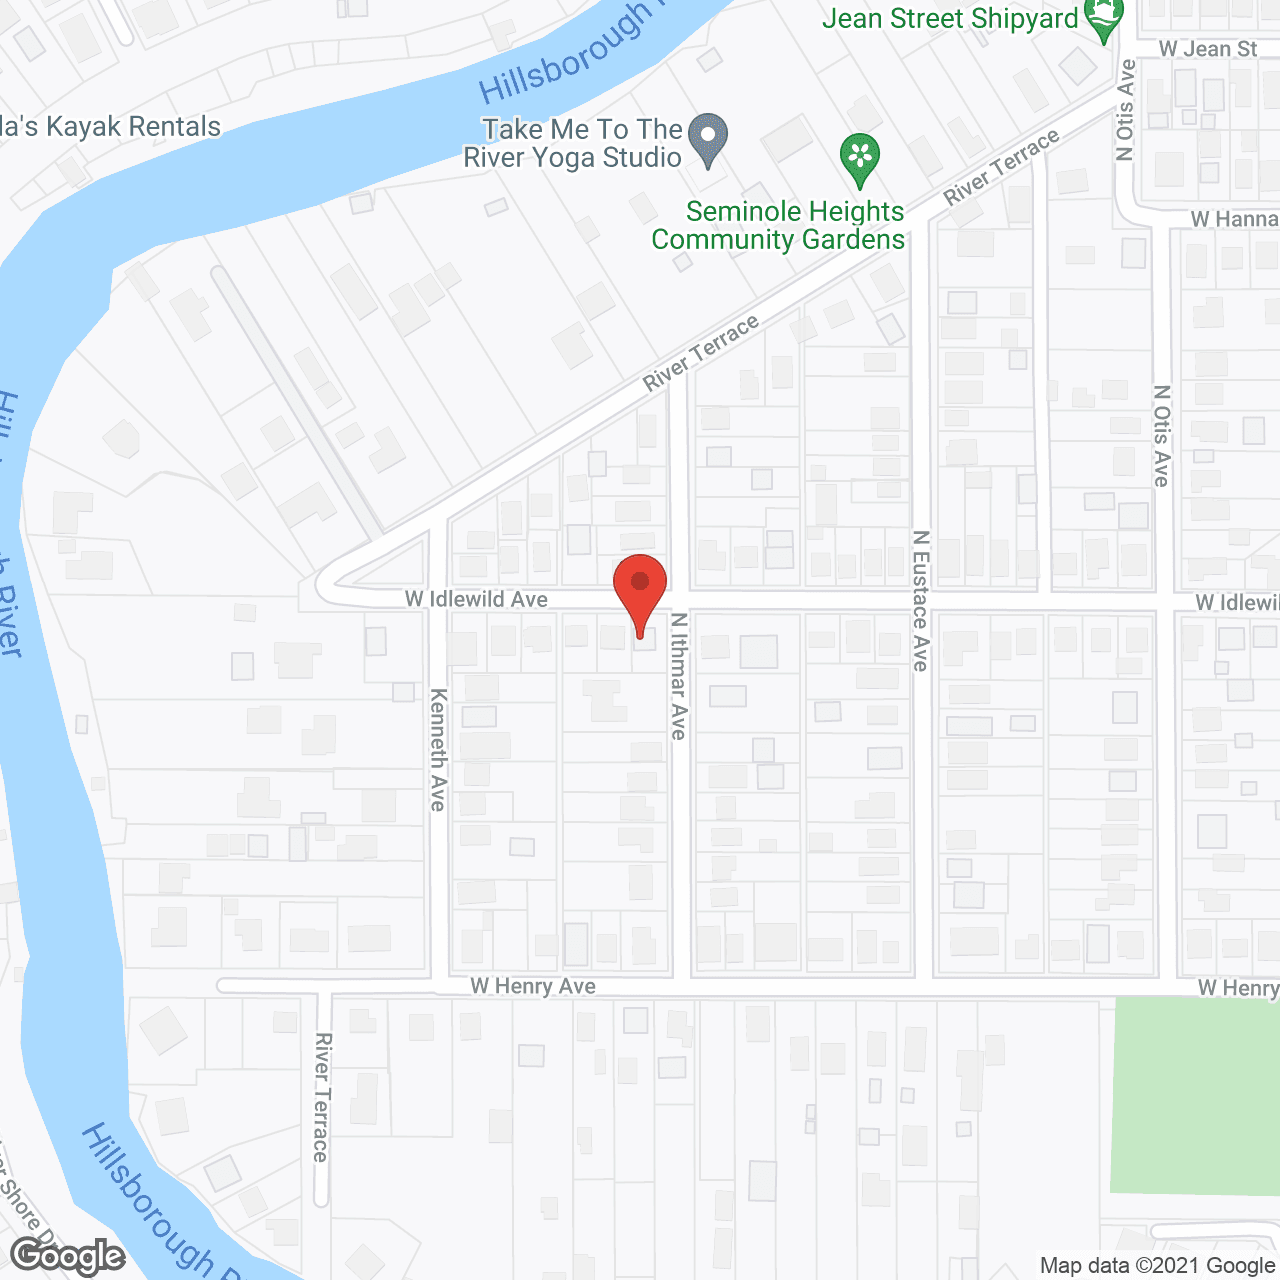 Neighbors House of Seminole Heights in google map